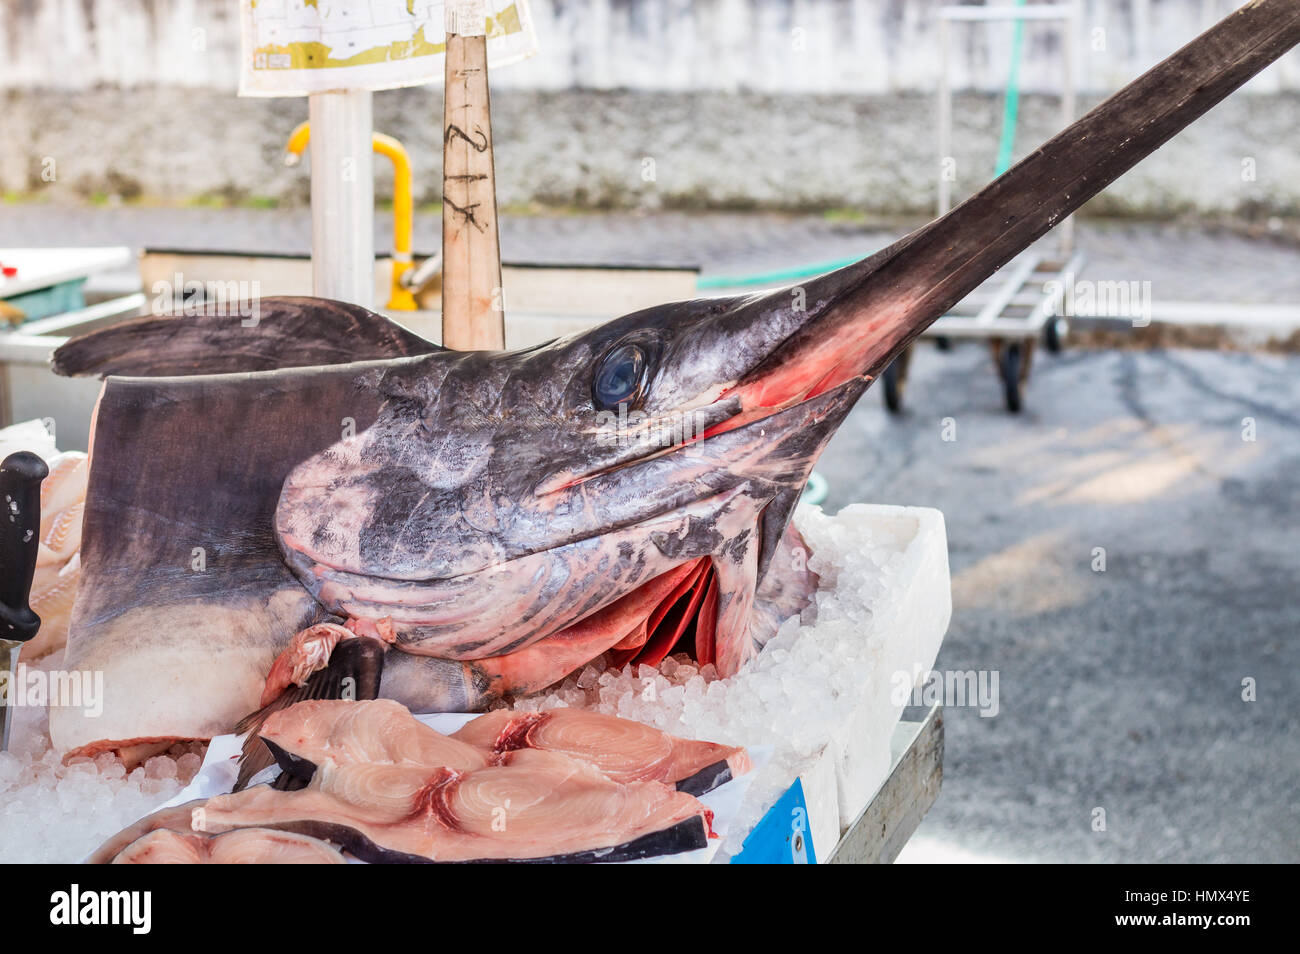 Swordfish. Sea fish. Raw food. Fish on sale at market. Stock Photo